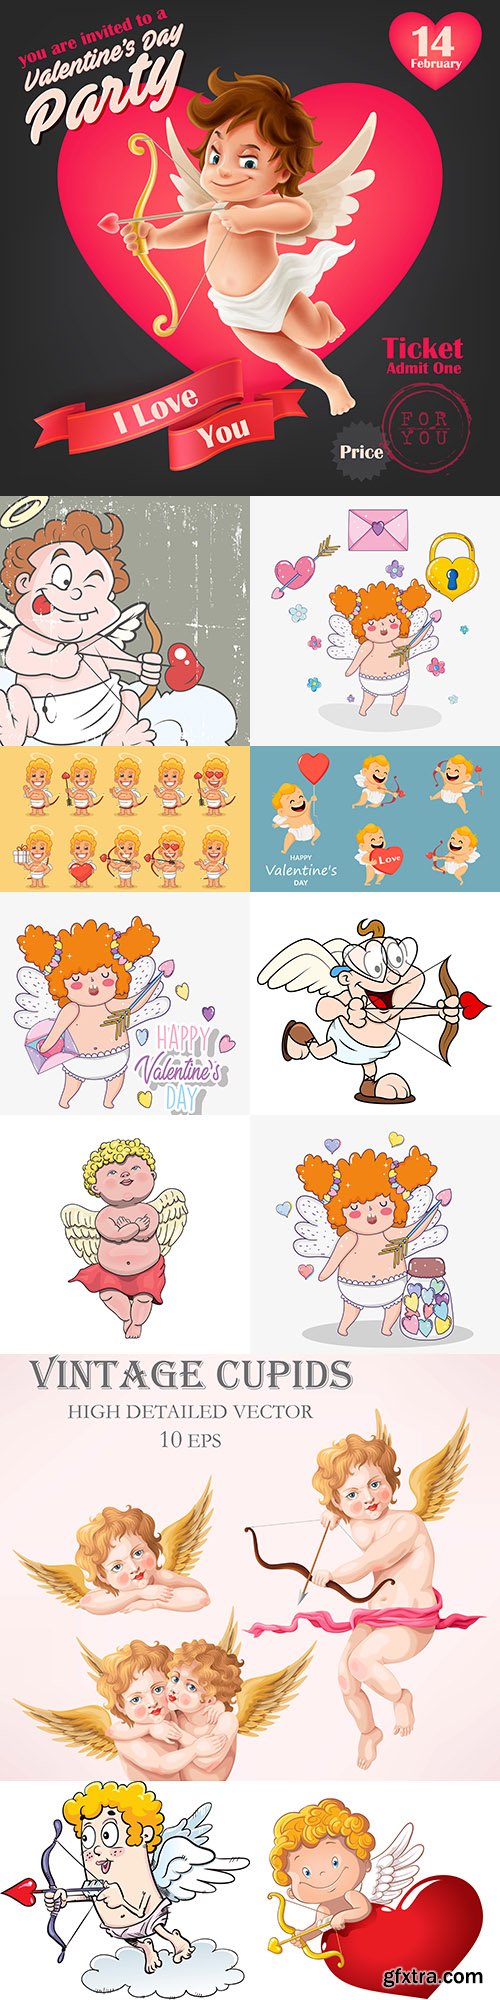 St. Valentine's day romantic cartoon cupid collection 3